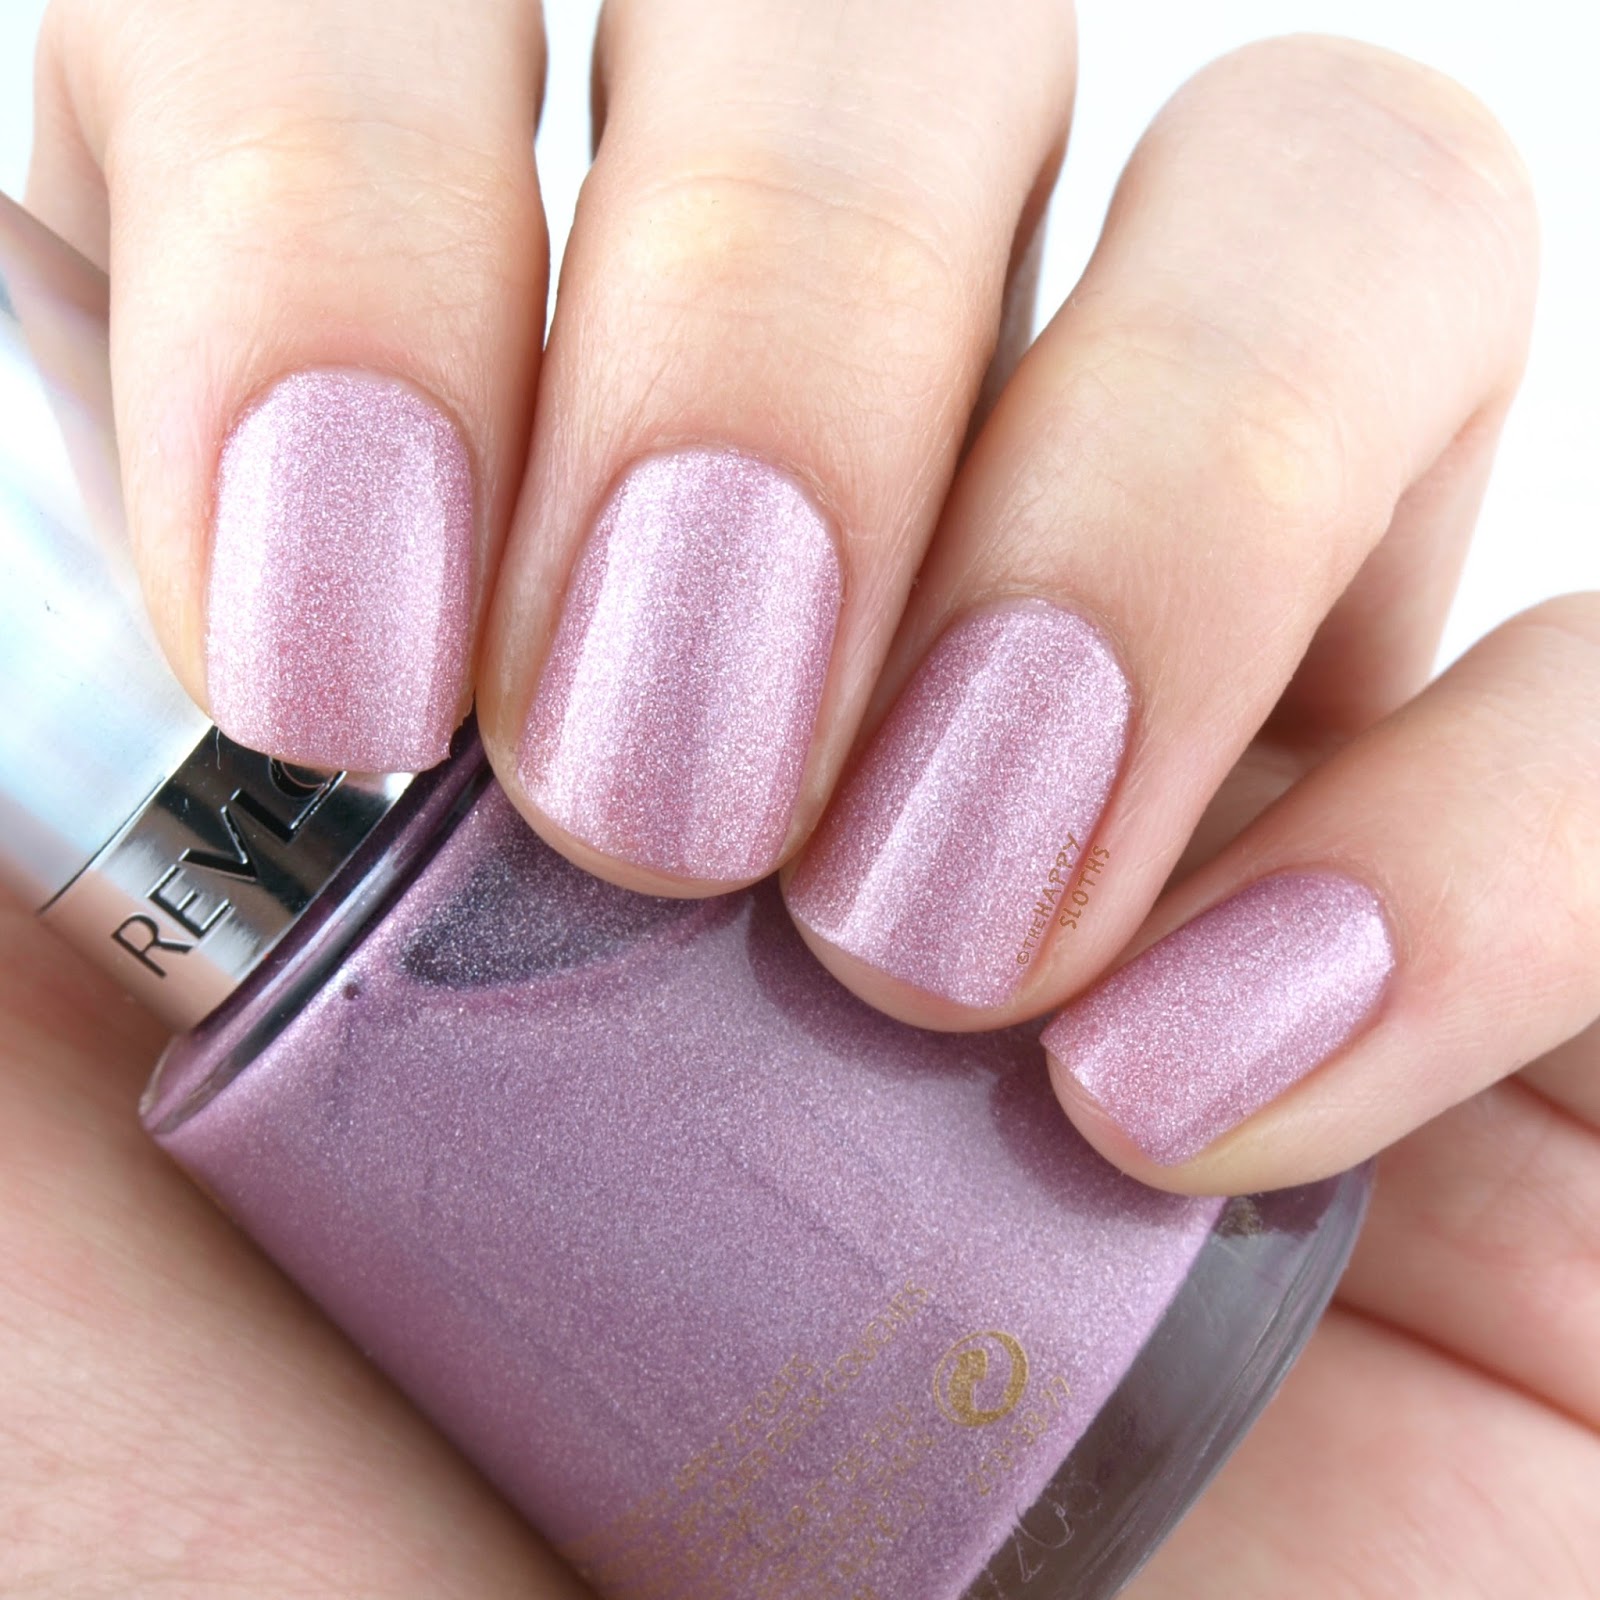 Revlon nail polish review – The Olive Unicorn Beauty Review